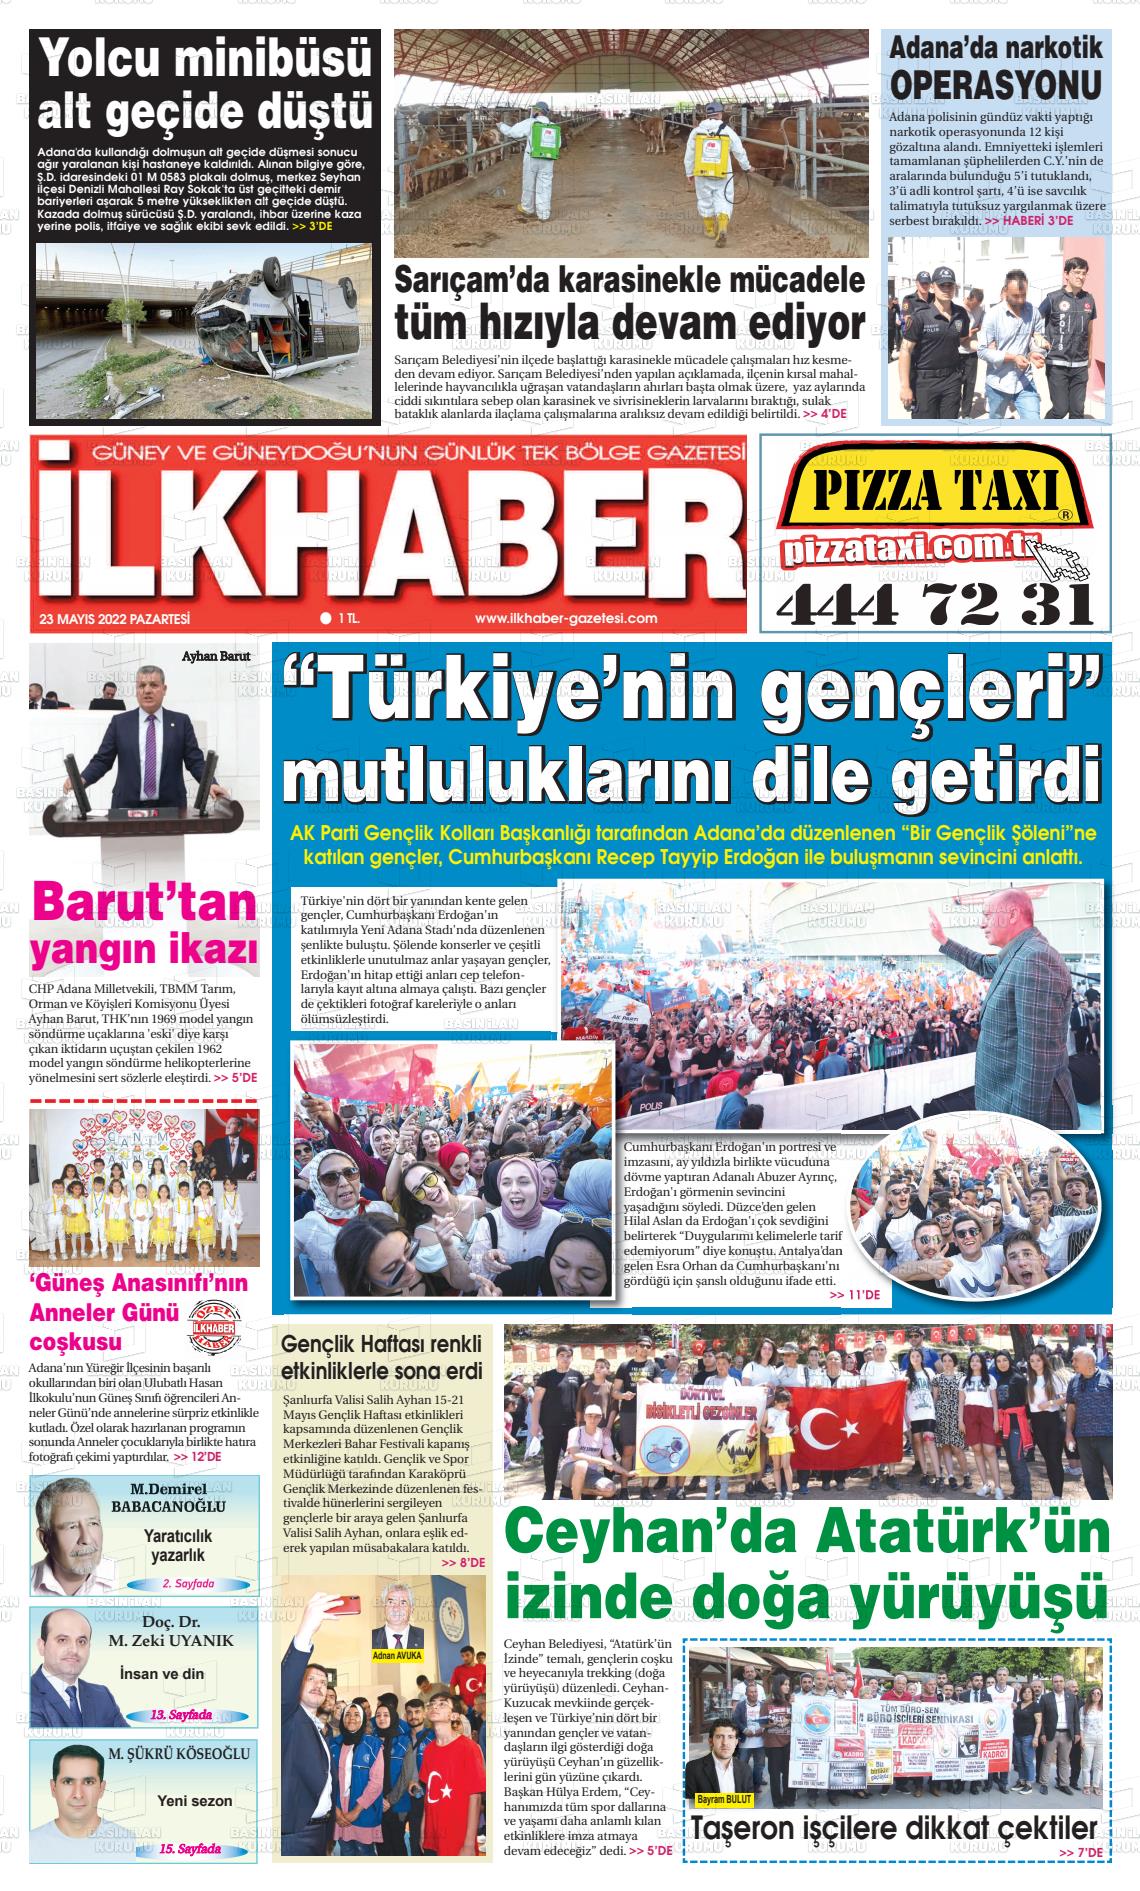 23 Mayıs 2022 İlk Haber Gazete Manşeti